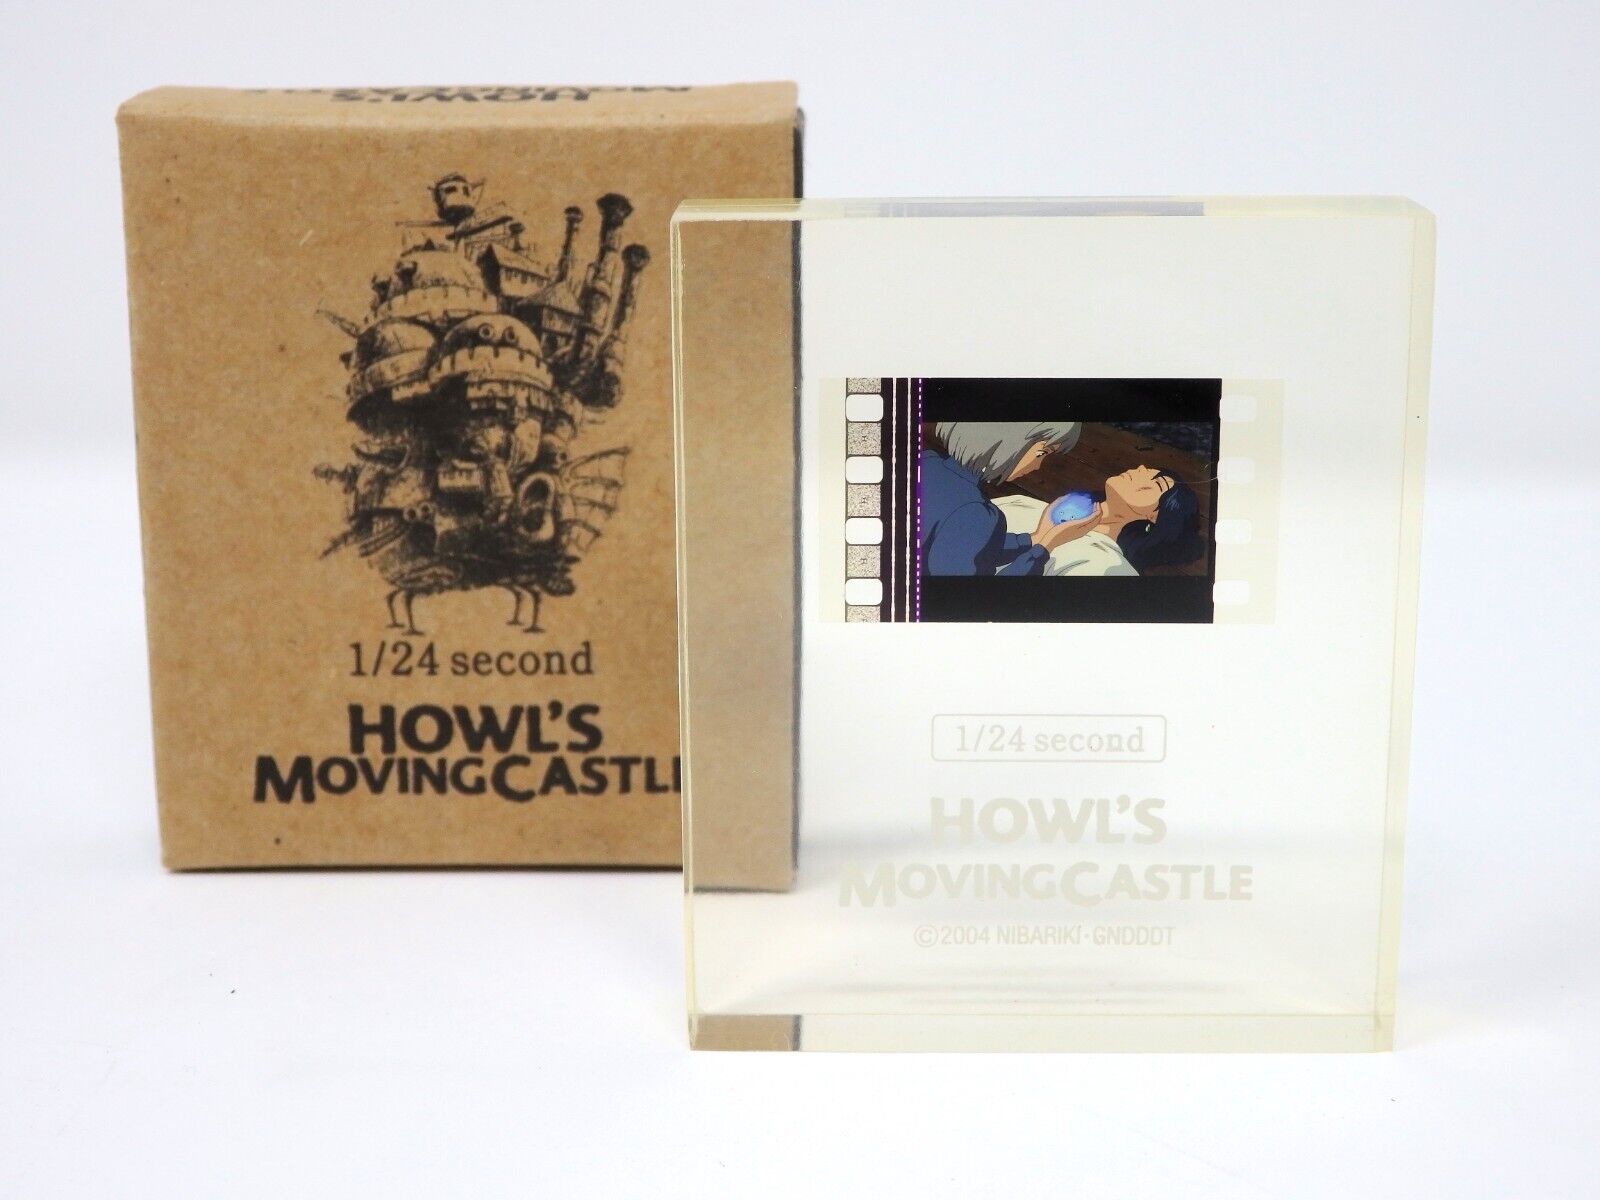 HOWL’S MOVING CASTLE Studio Ghibli film 1/24 Second Cube Ornament Hayao Miyazaki